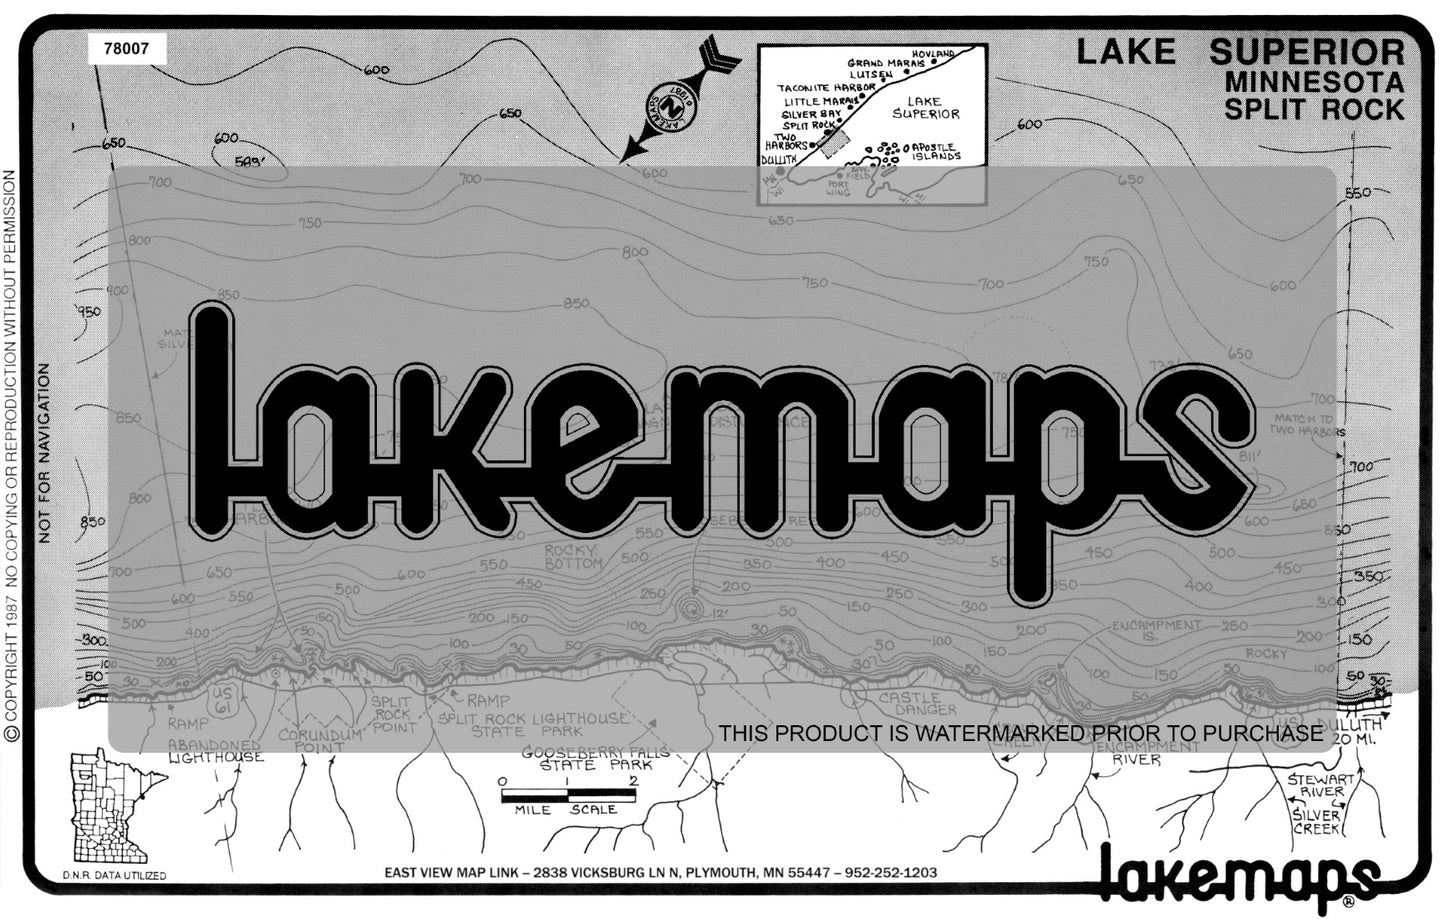 Lake Superior - Lower North Shore - SPLIT ROCK - Lakemap - 78007